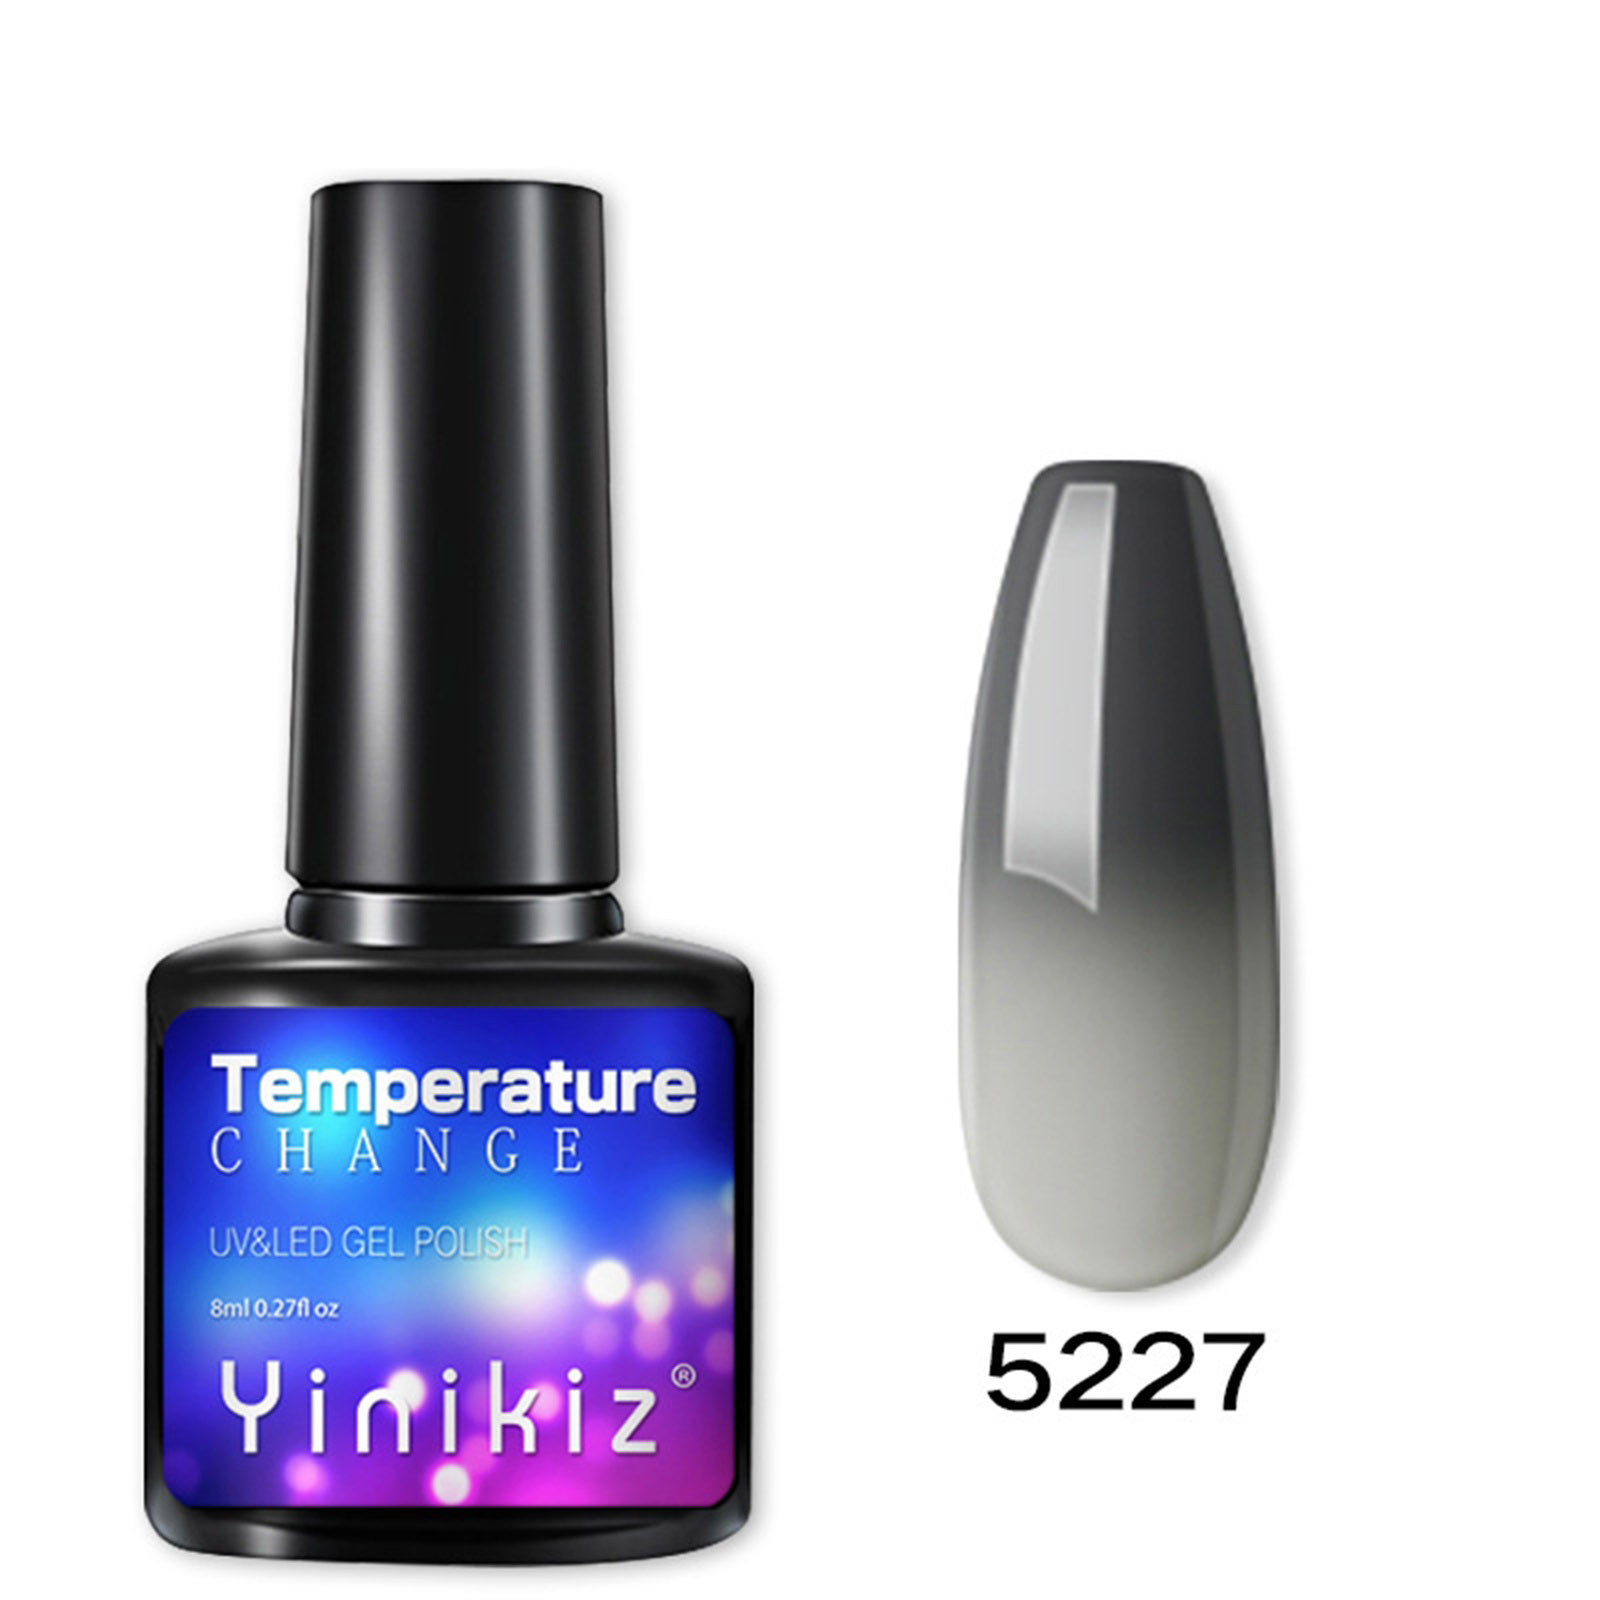 Tejiojio HoliDay Home Trends Temperature Change Nail Glue Gradient Phototherapy Nail Polish Glue Tool 8ml - image 1 of 2